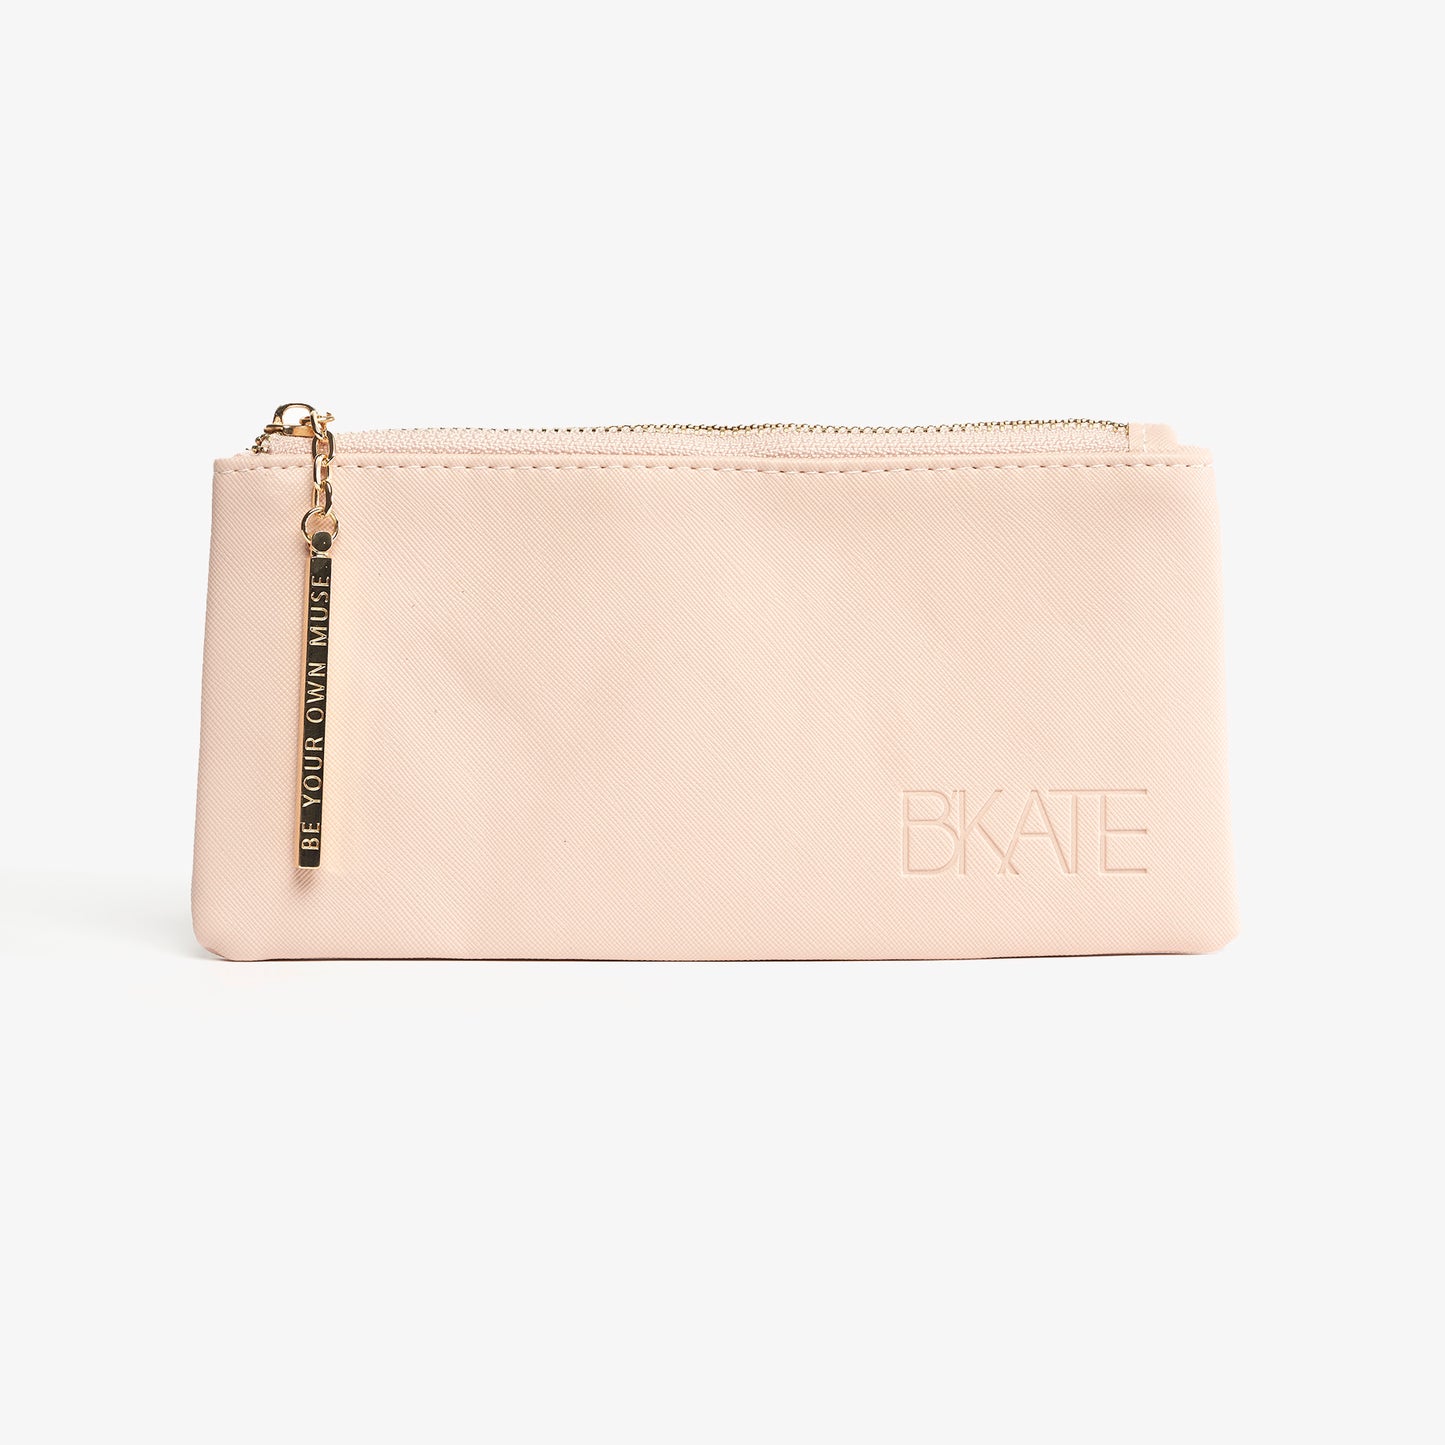 B'KATE Little Zip Bag